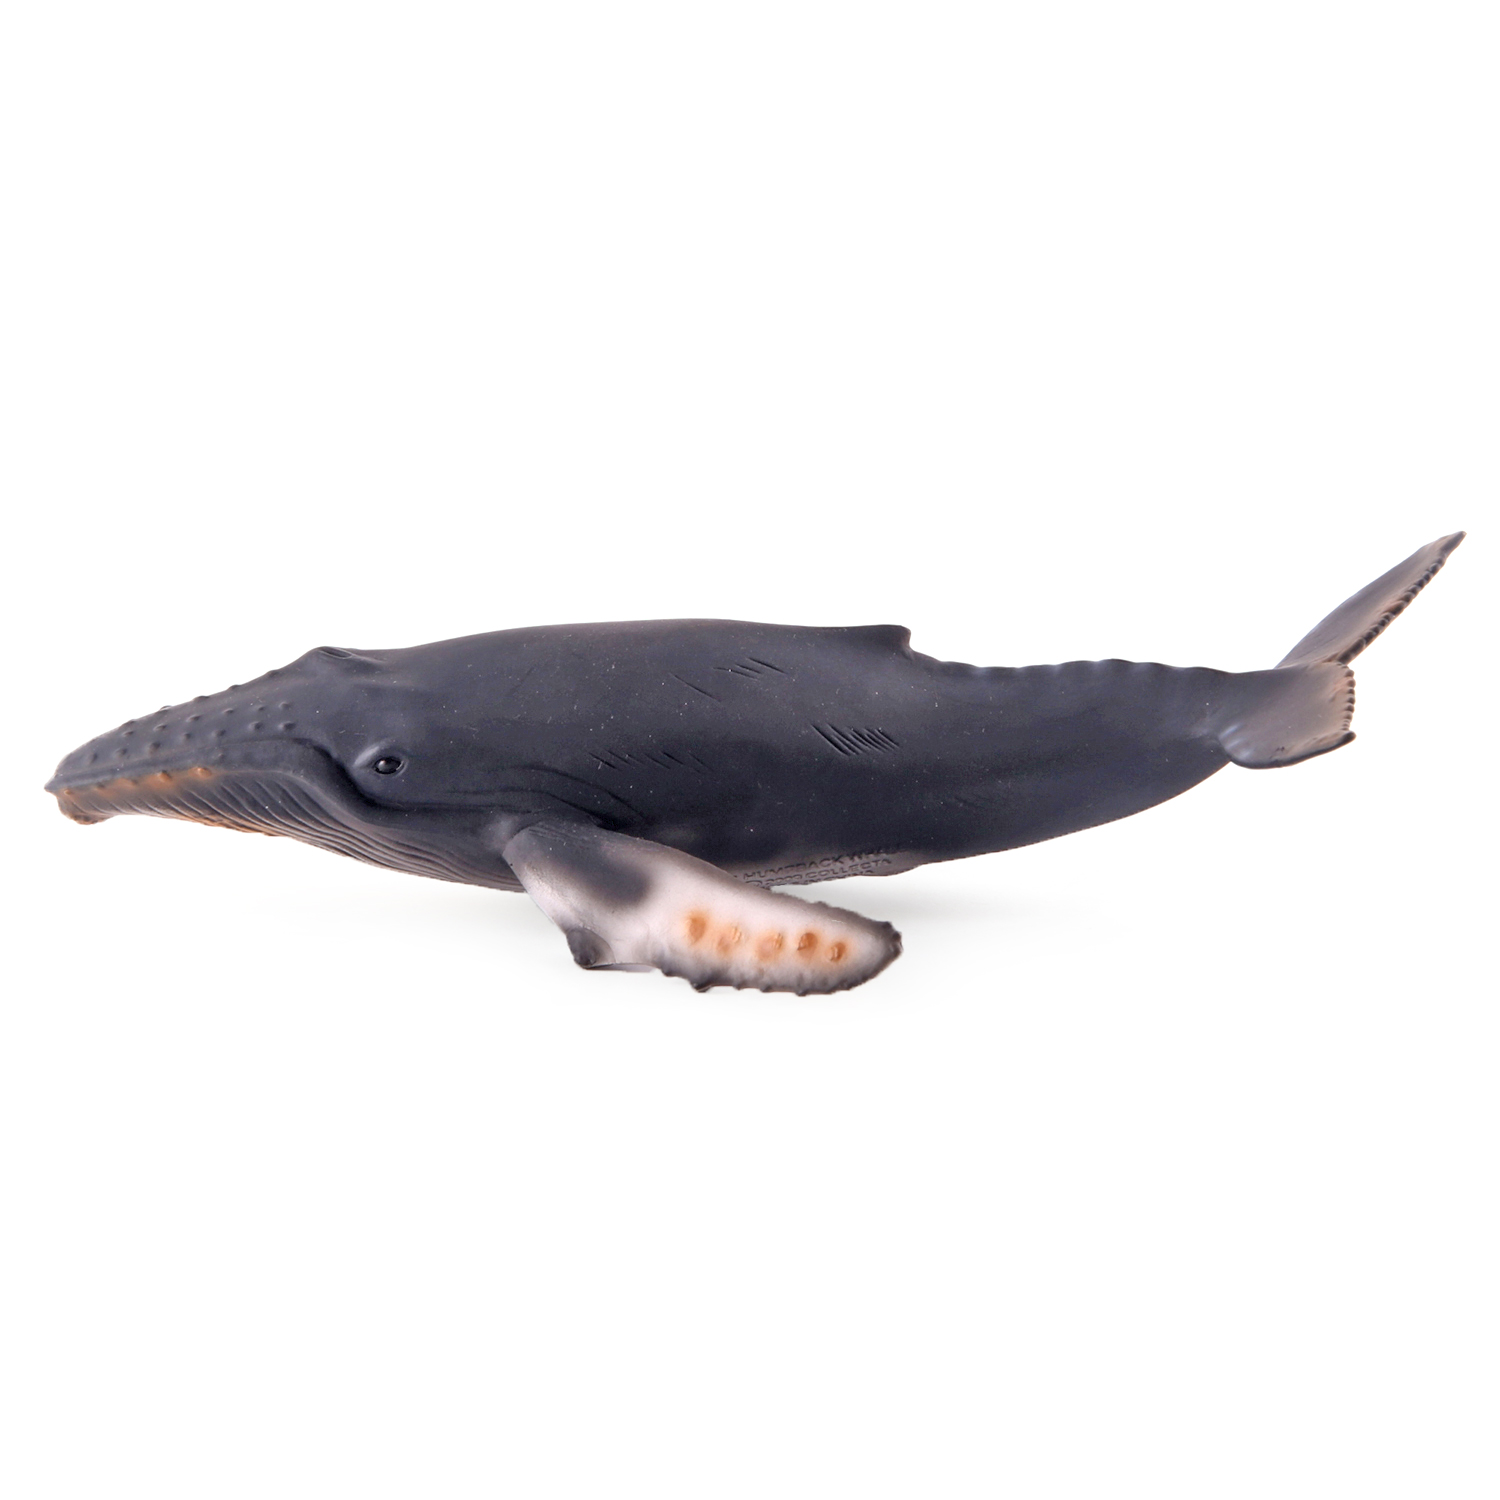 Collecta Фигурка Горбатый кит XL